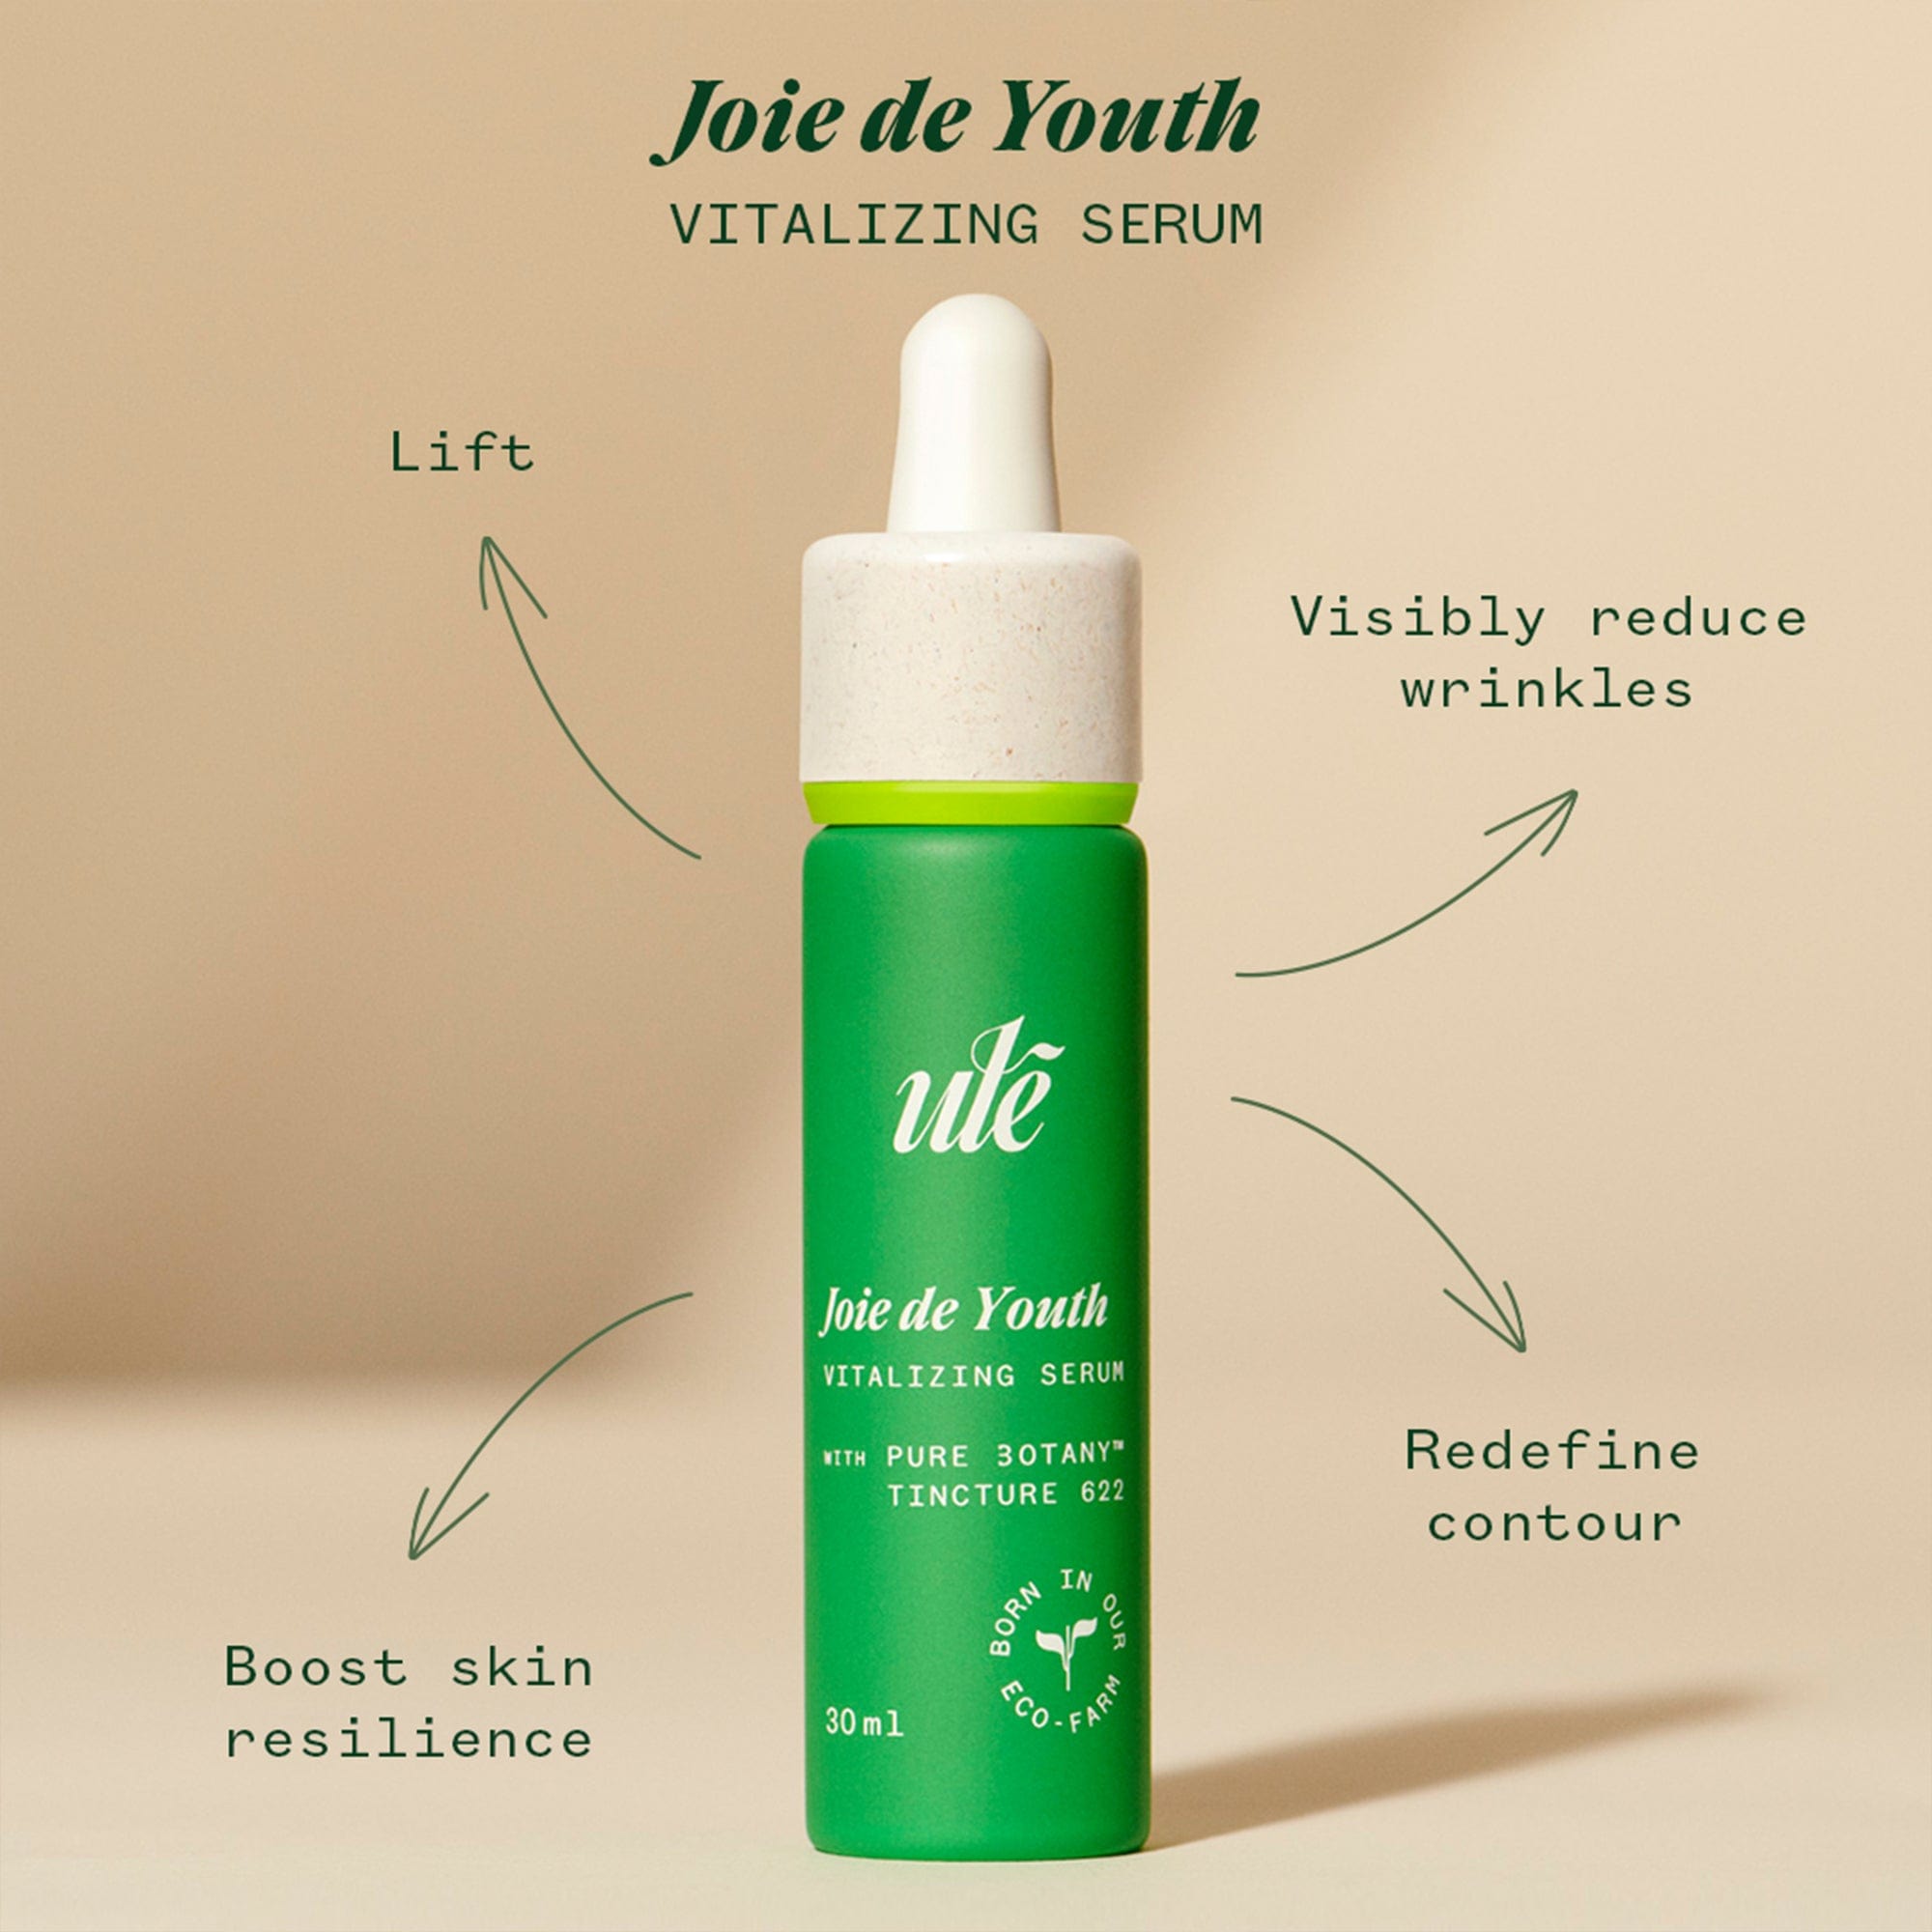 Joie de Youth Ulé Revitalizing anti-aging serum